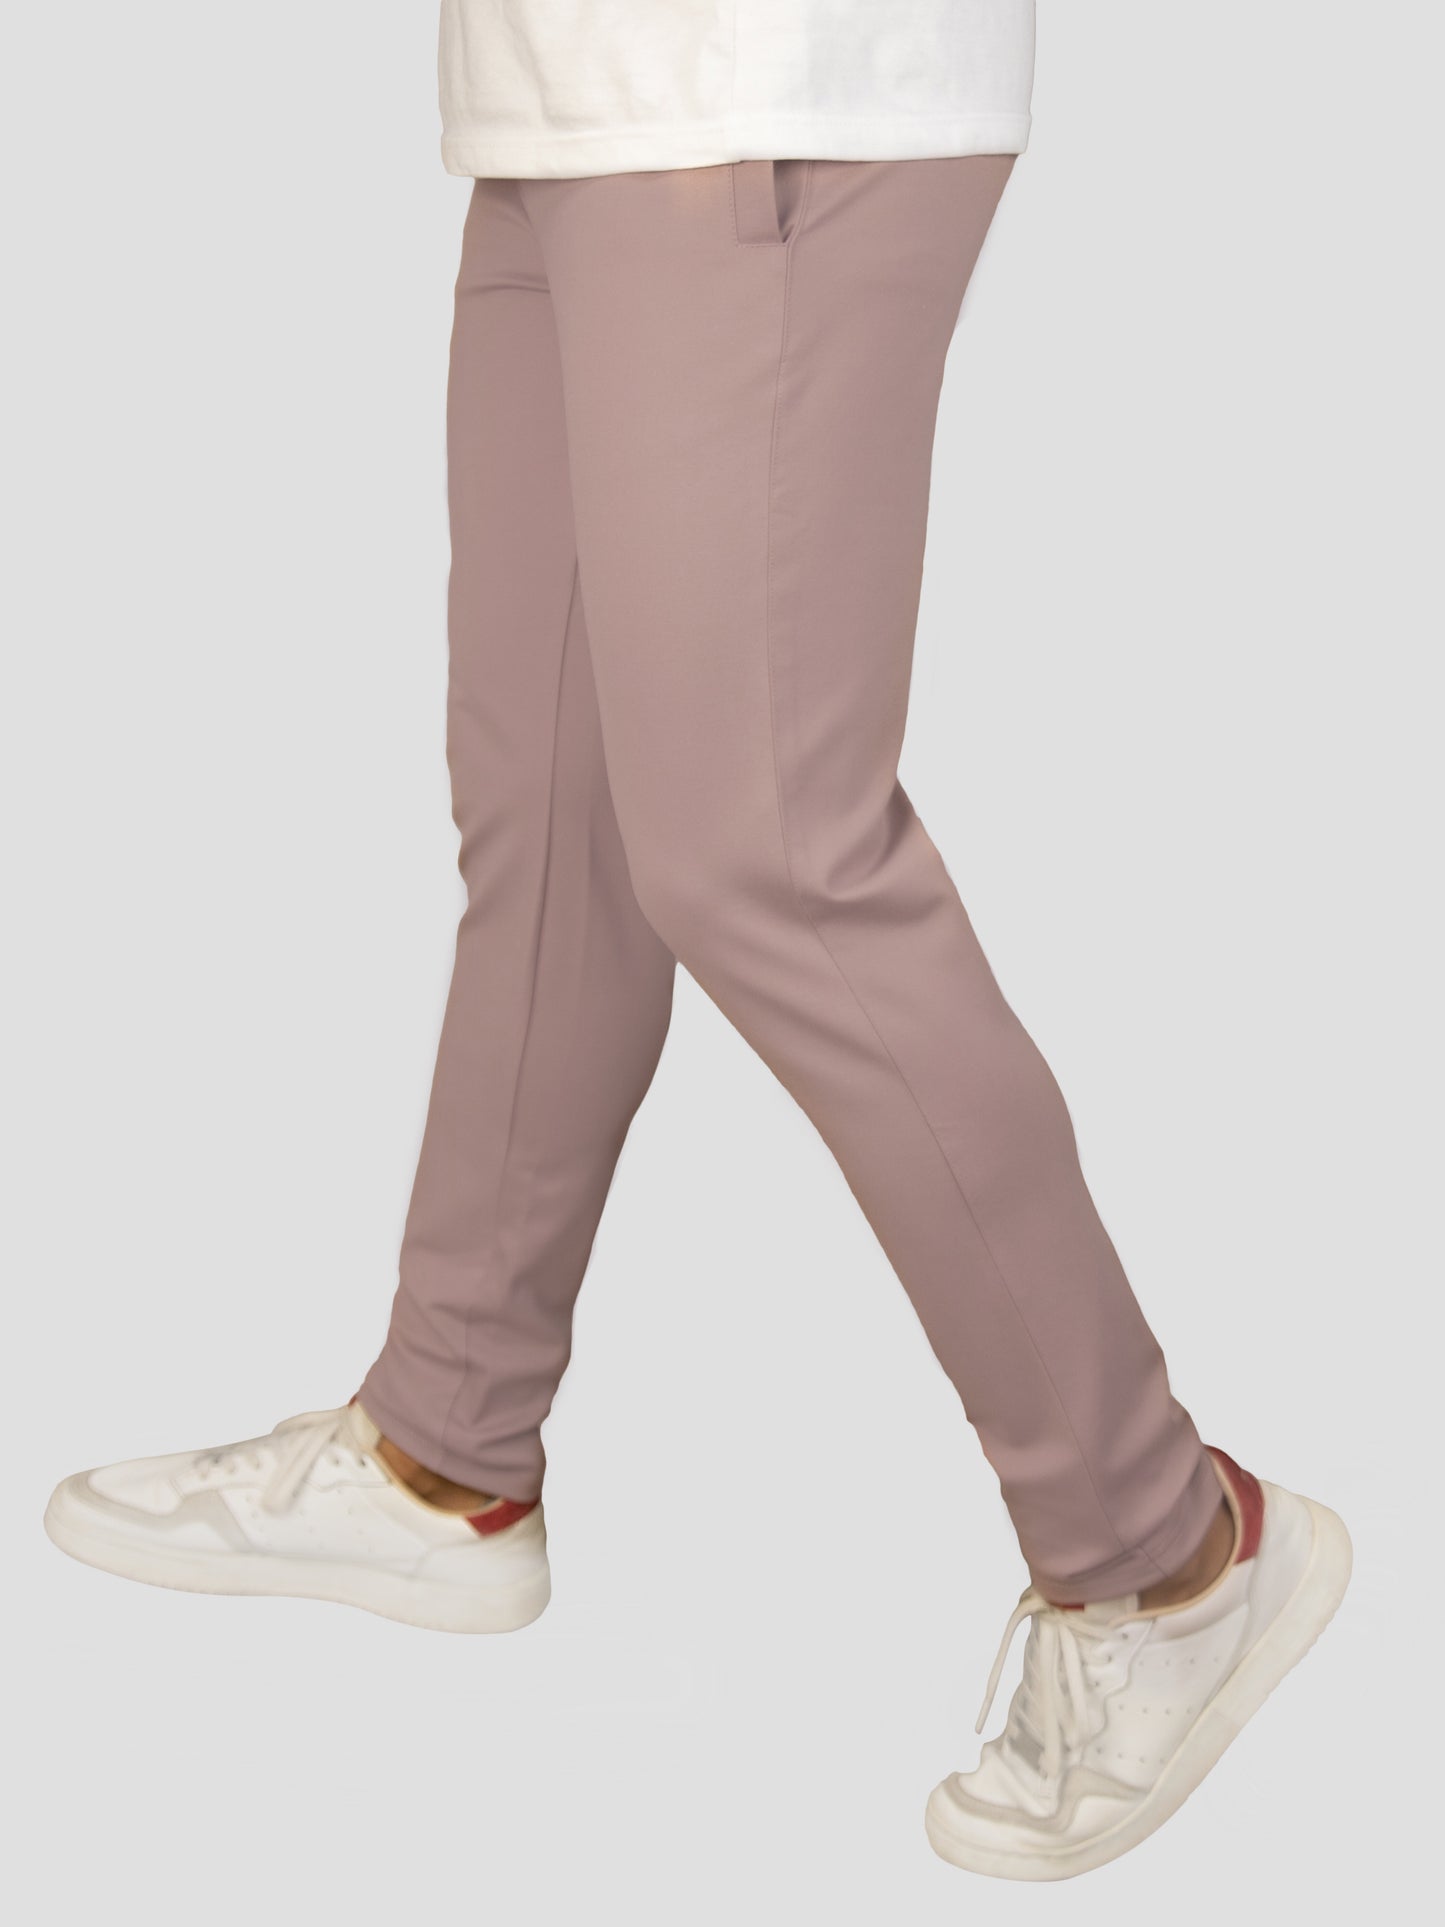 Rose Pink trouser trackpant for men